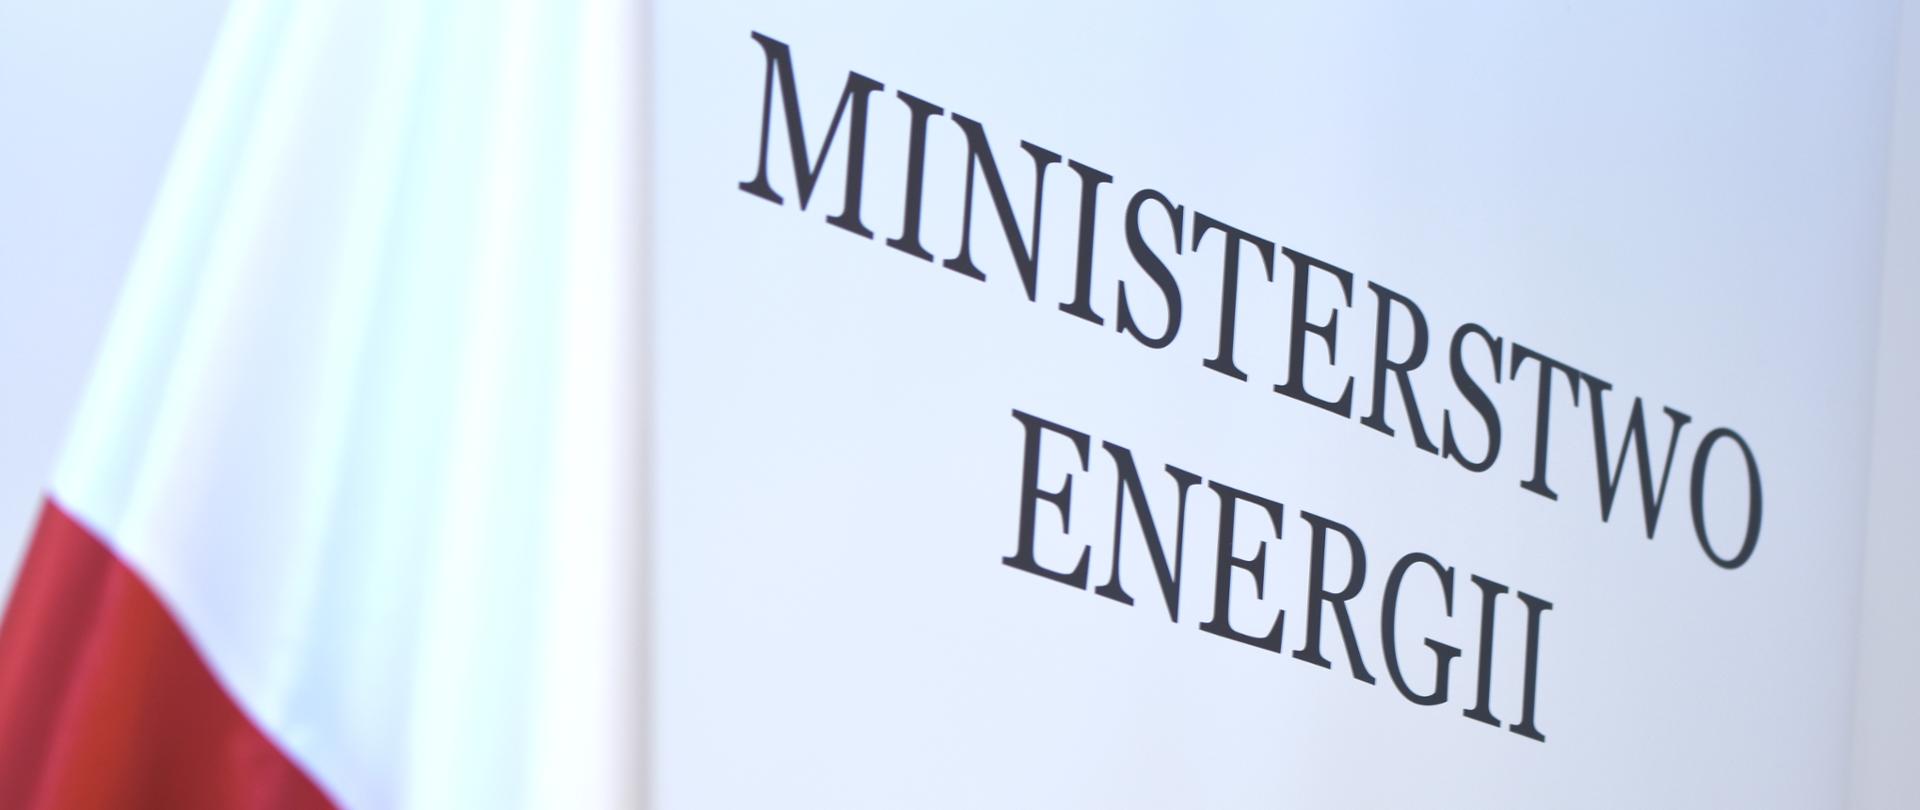 Napis Ministerstwo Energii